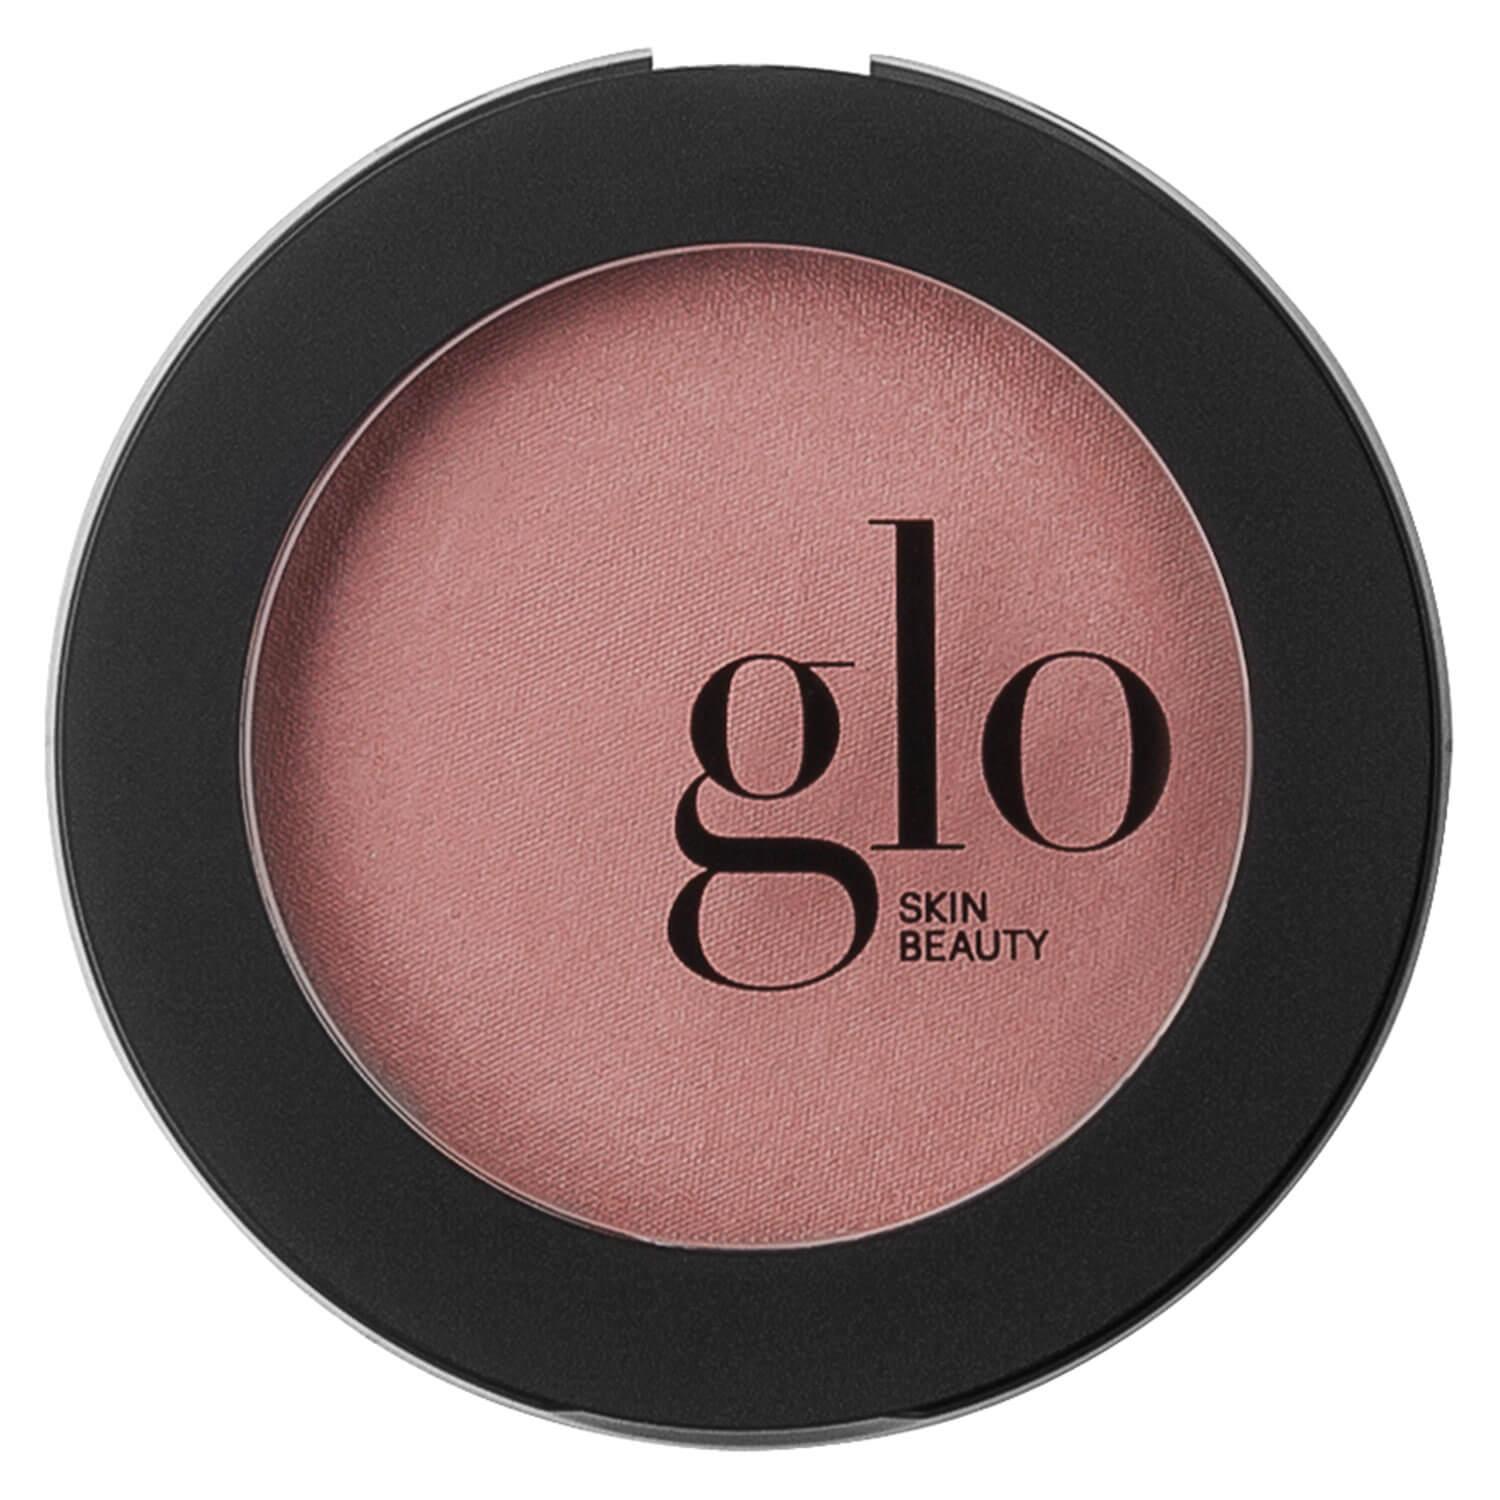 Glo Skin Beauty Blush - Blush Sheer Petal